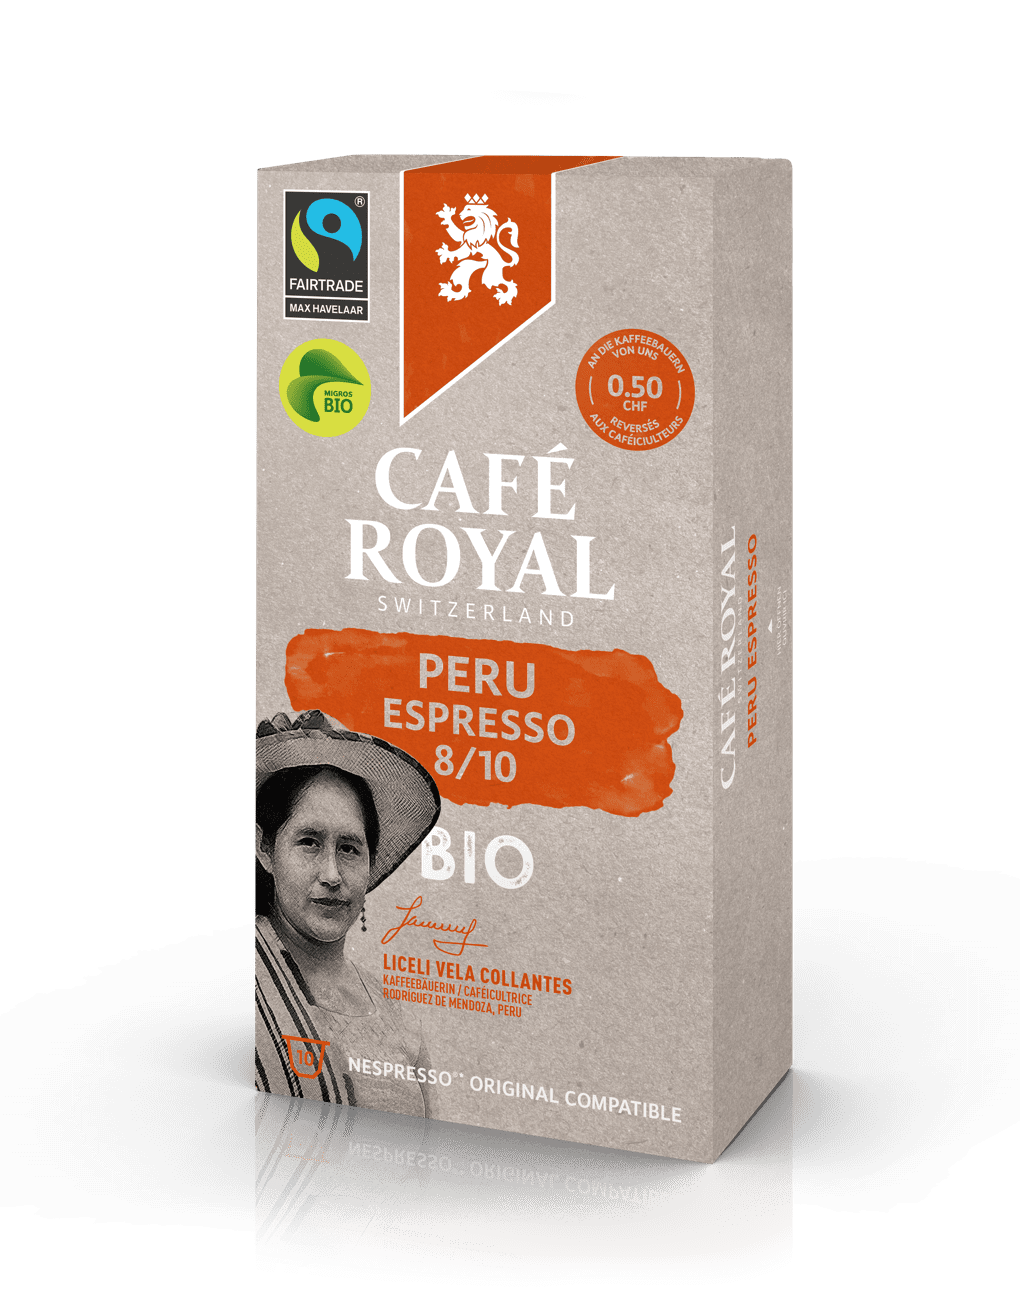 Bio Peru Espresso 10 koffiecapsules Nespresso compatibel van Café Royal